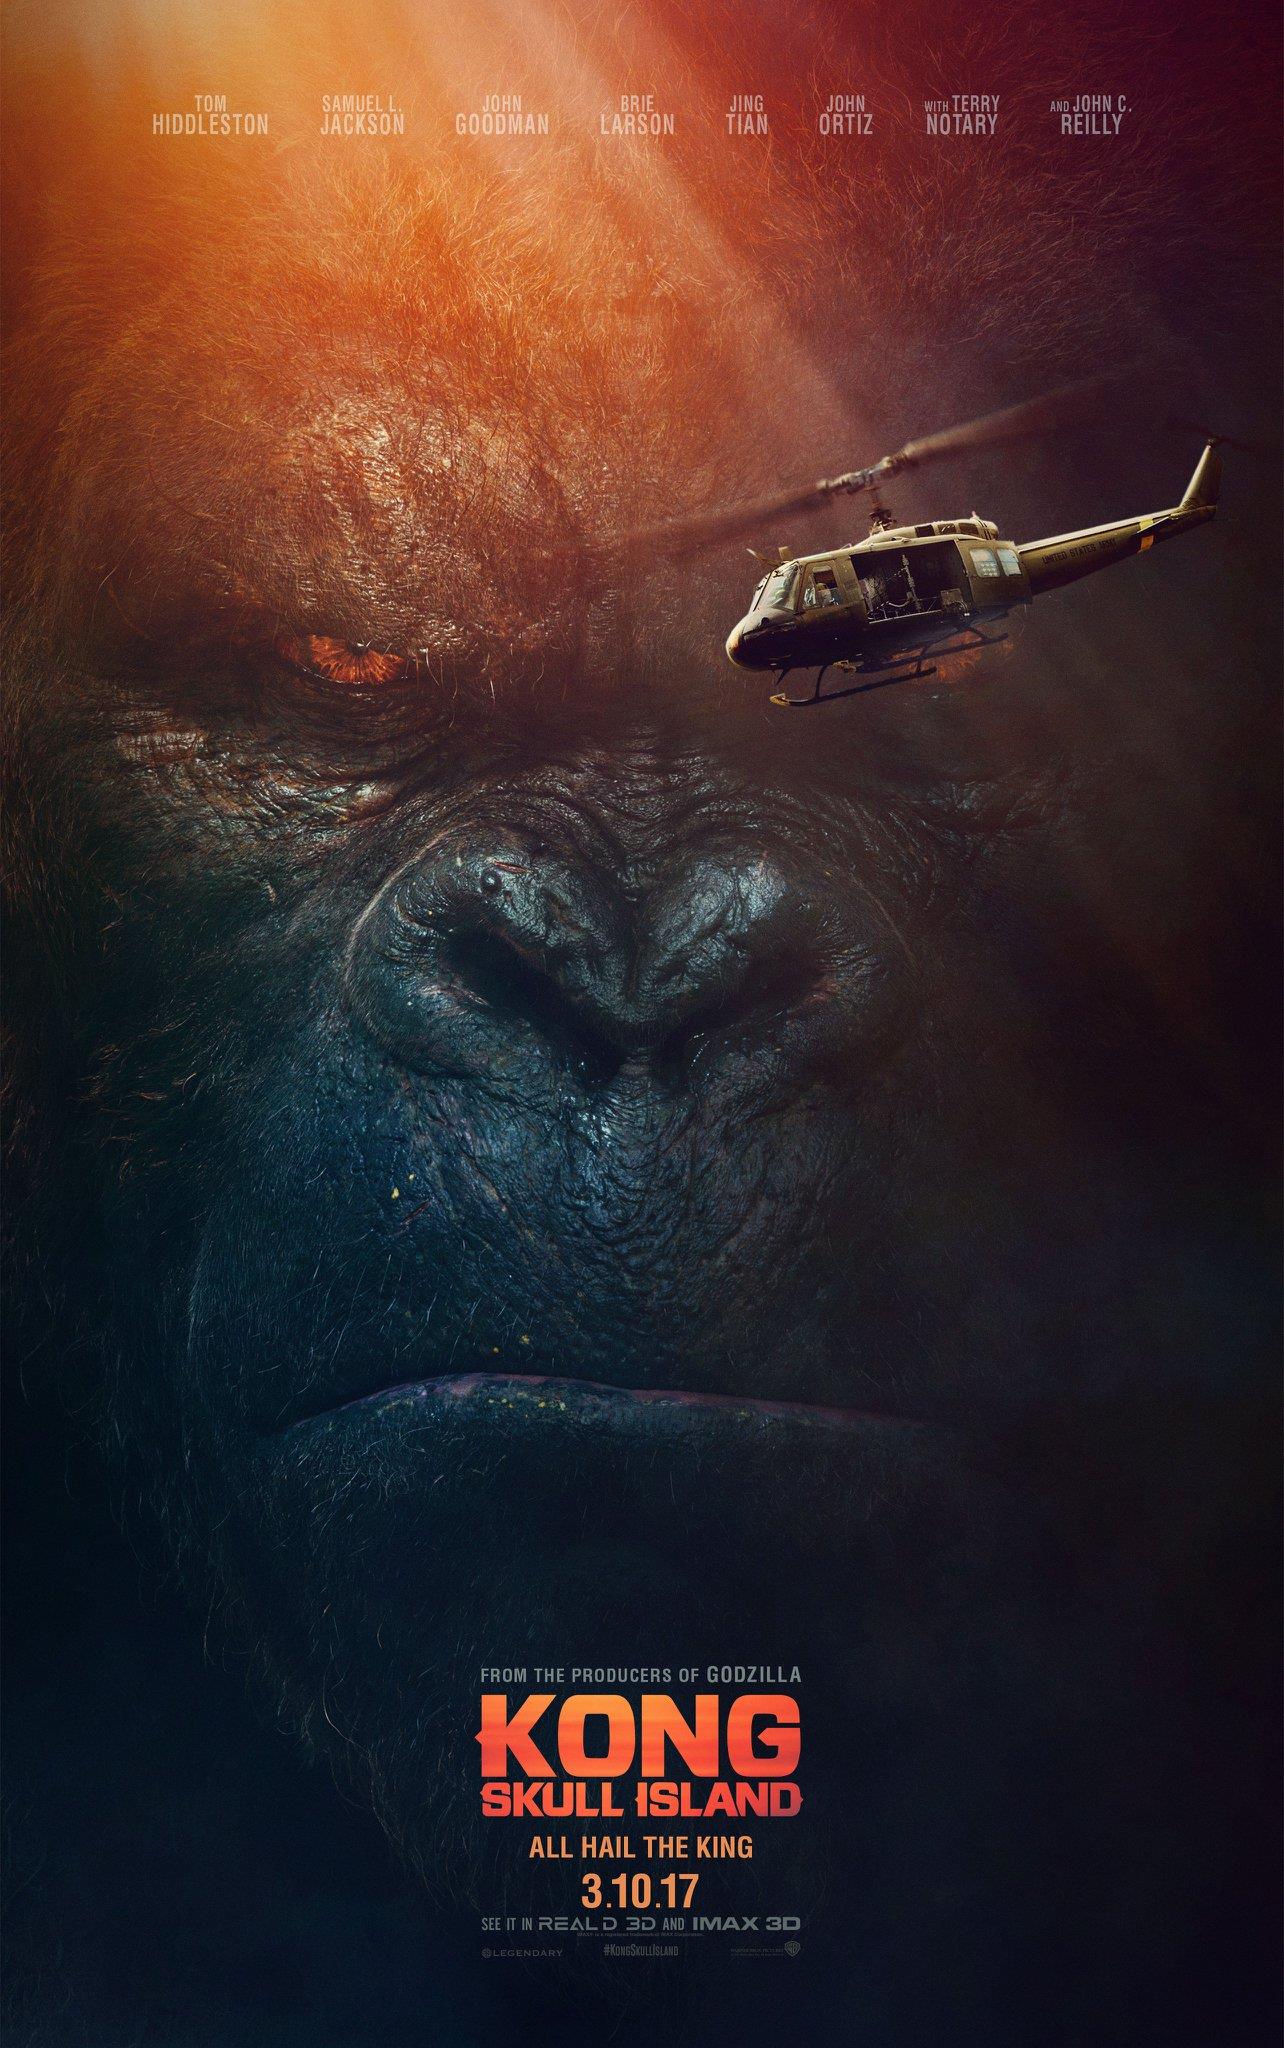 Poster de Kong: Skull Island avec le visage de King Kong